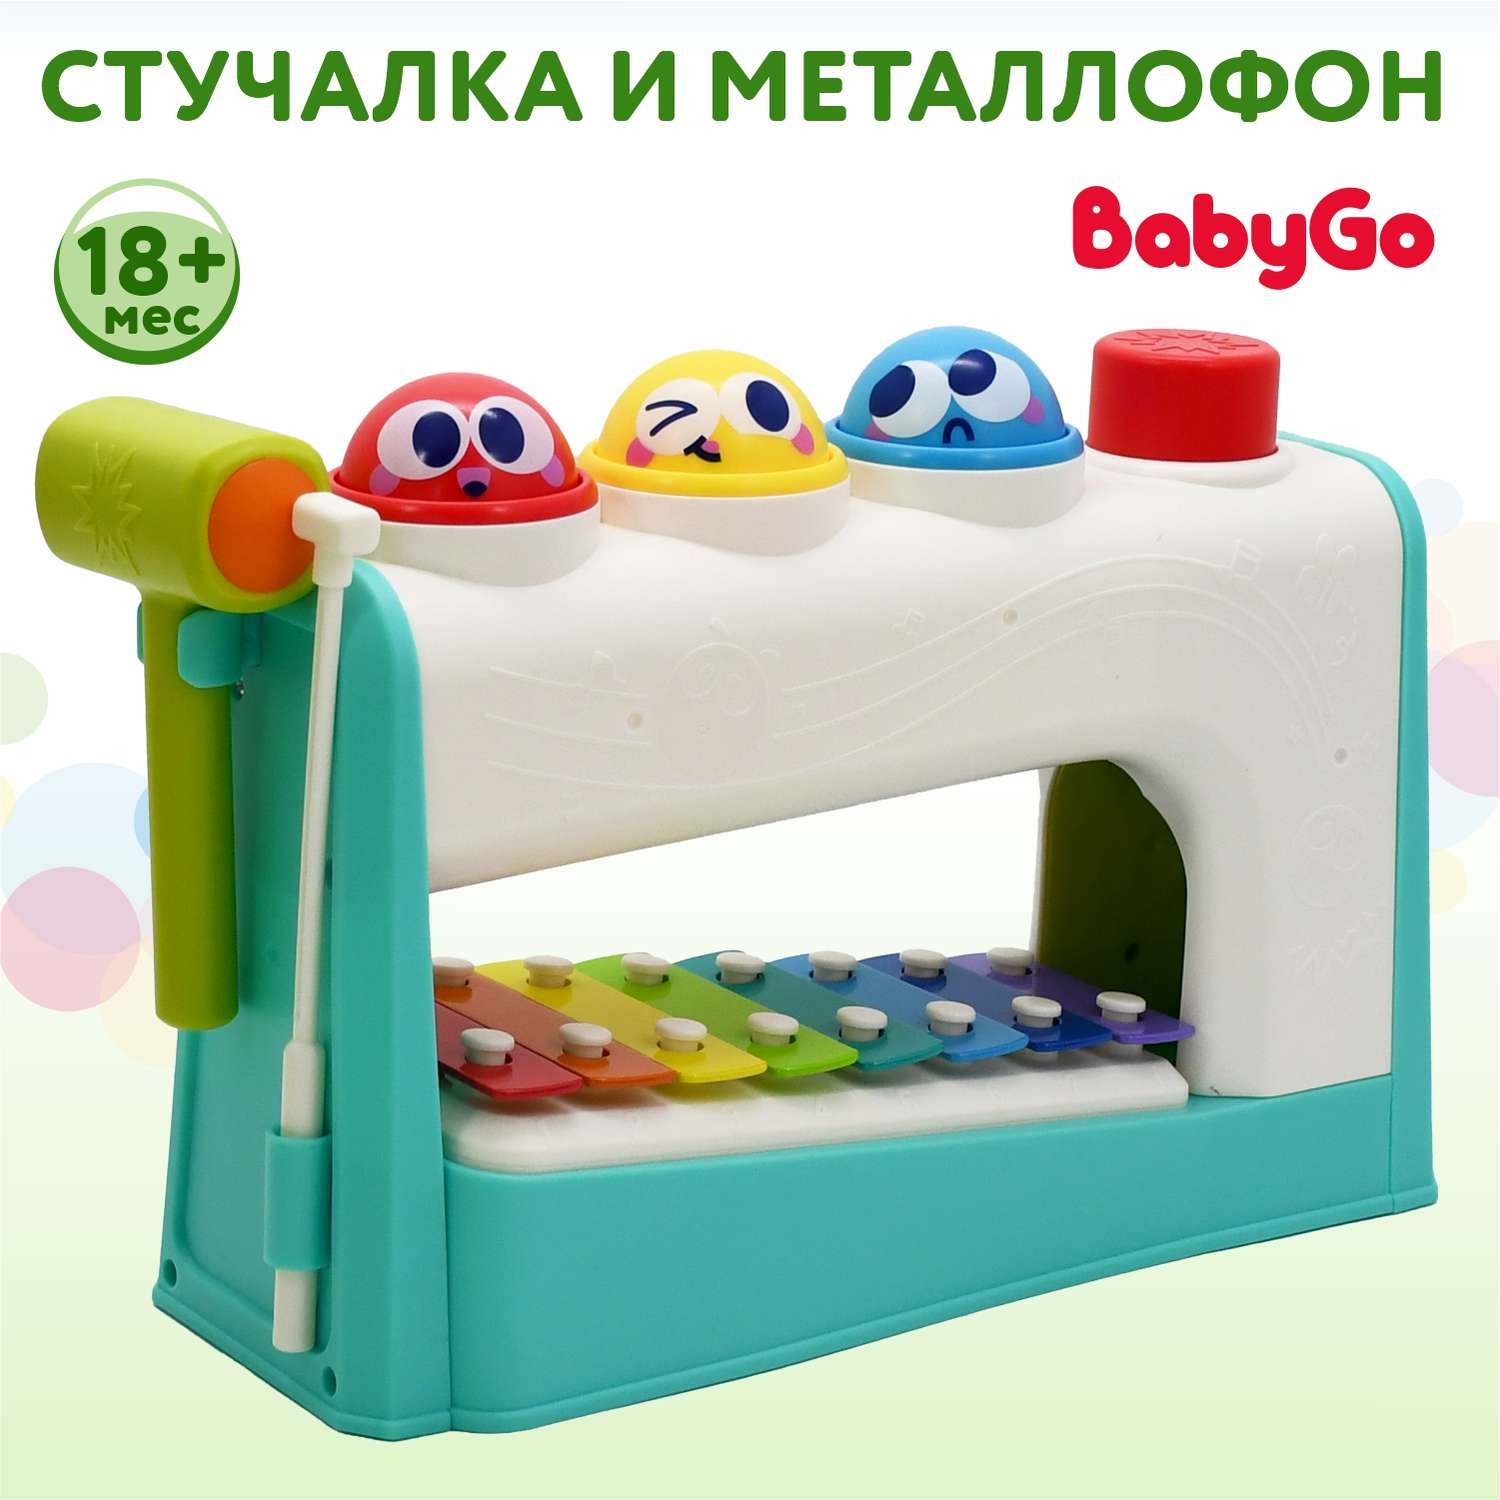 Игрушка развивающая Baby Go 2в1 Стучалка и металлофон OTG0952940 - фото 1